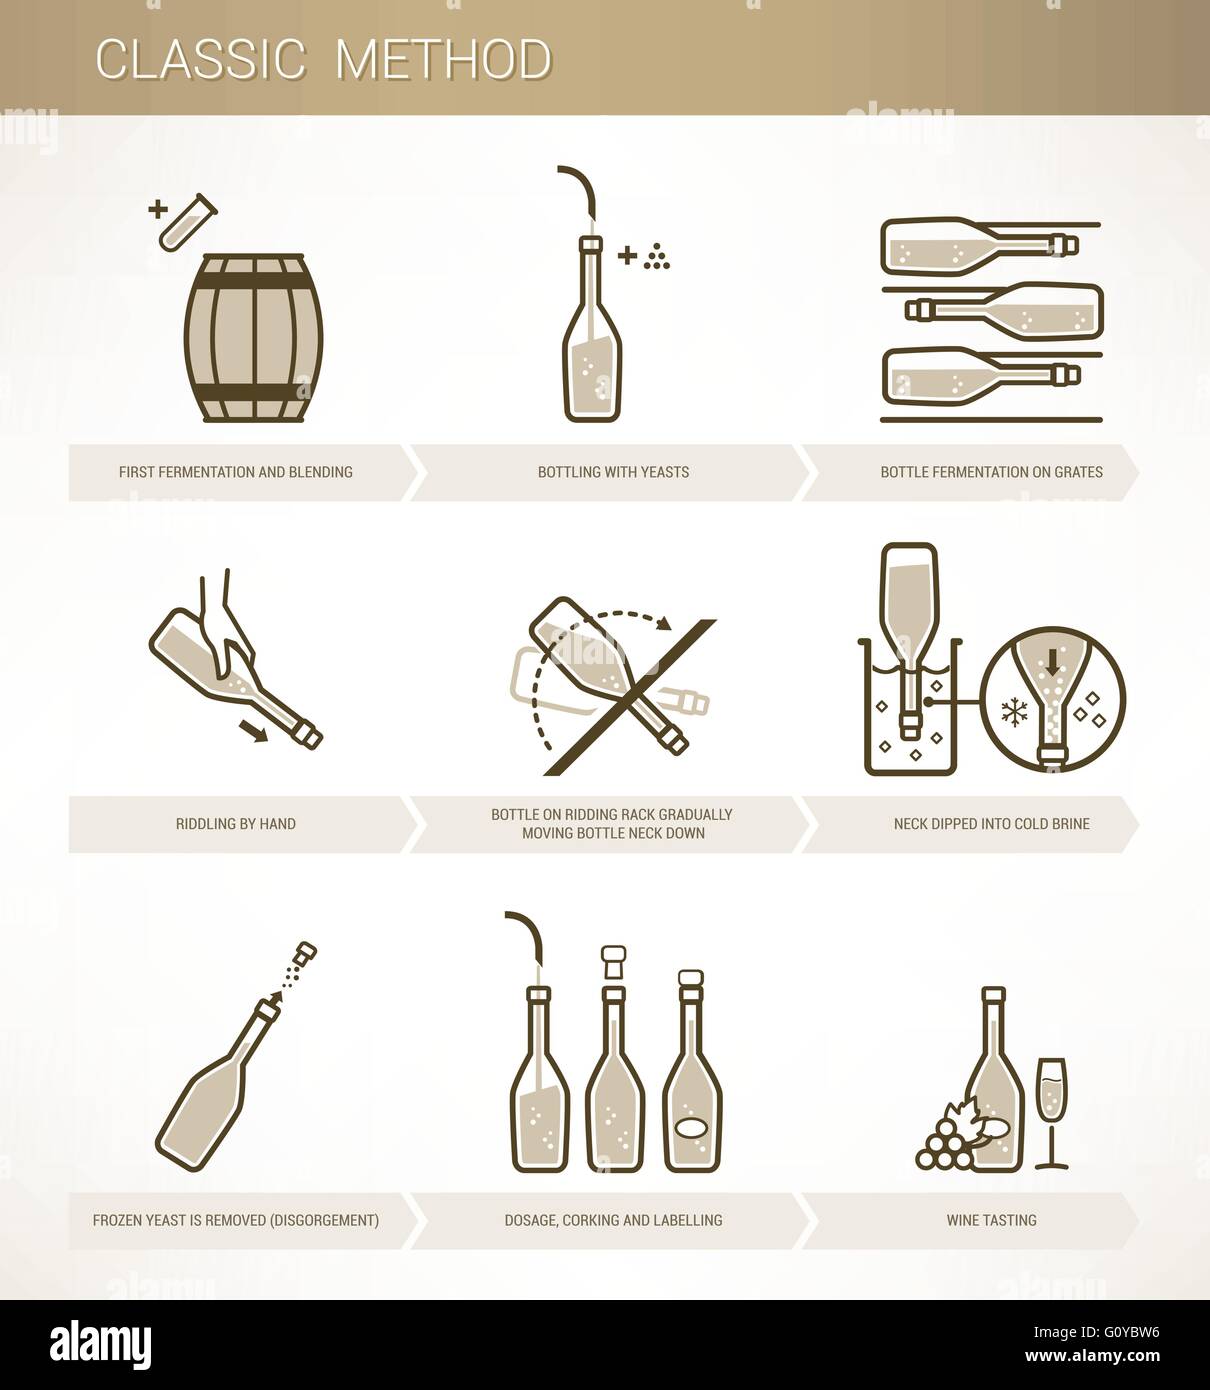 Winemaking classic method procedure, wine fermentation and bottling Stock Vector